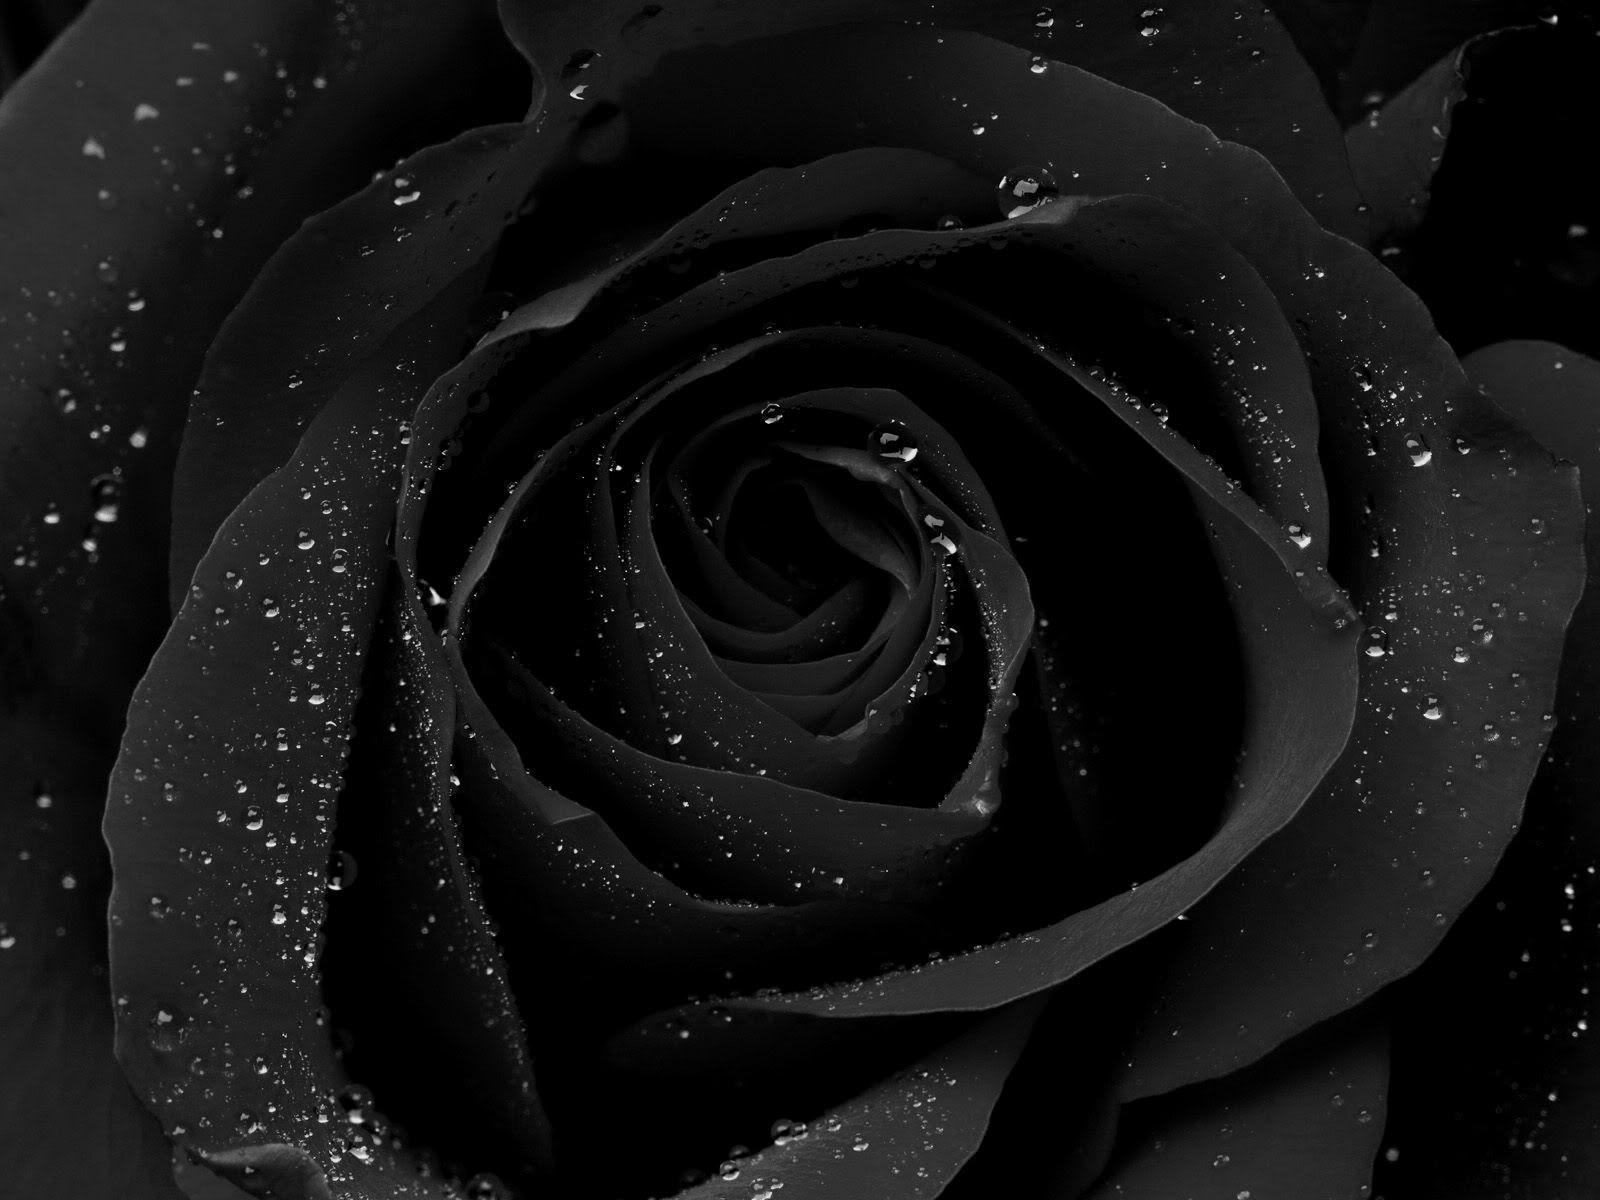 Black rose meaning